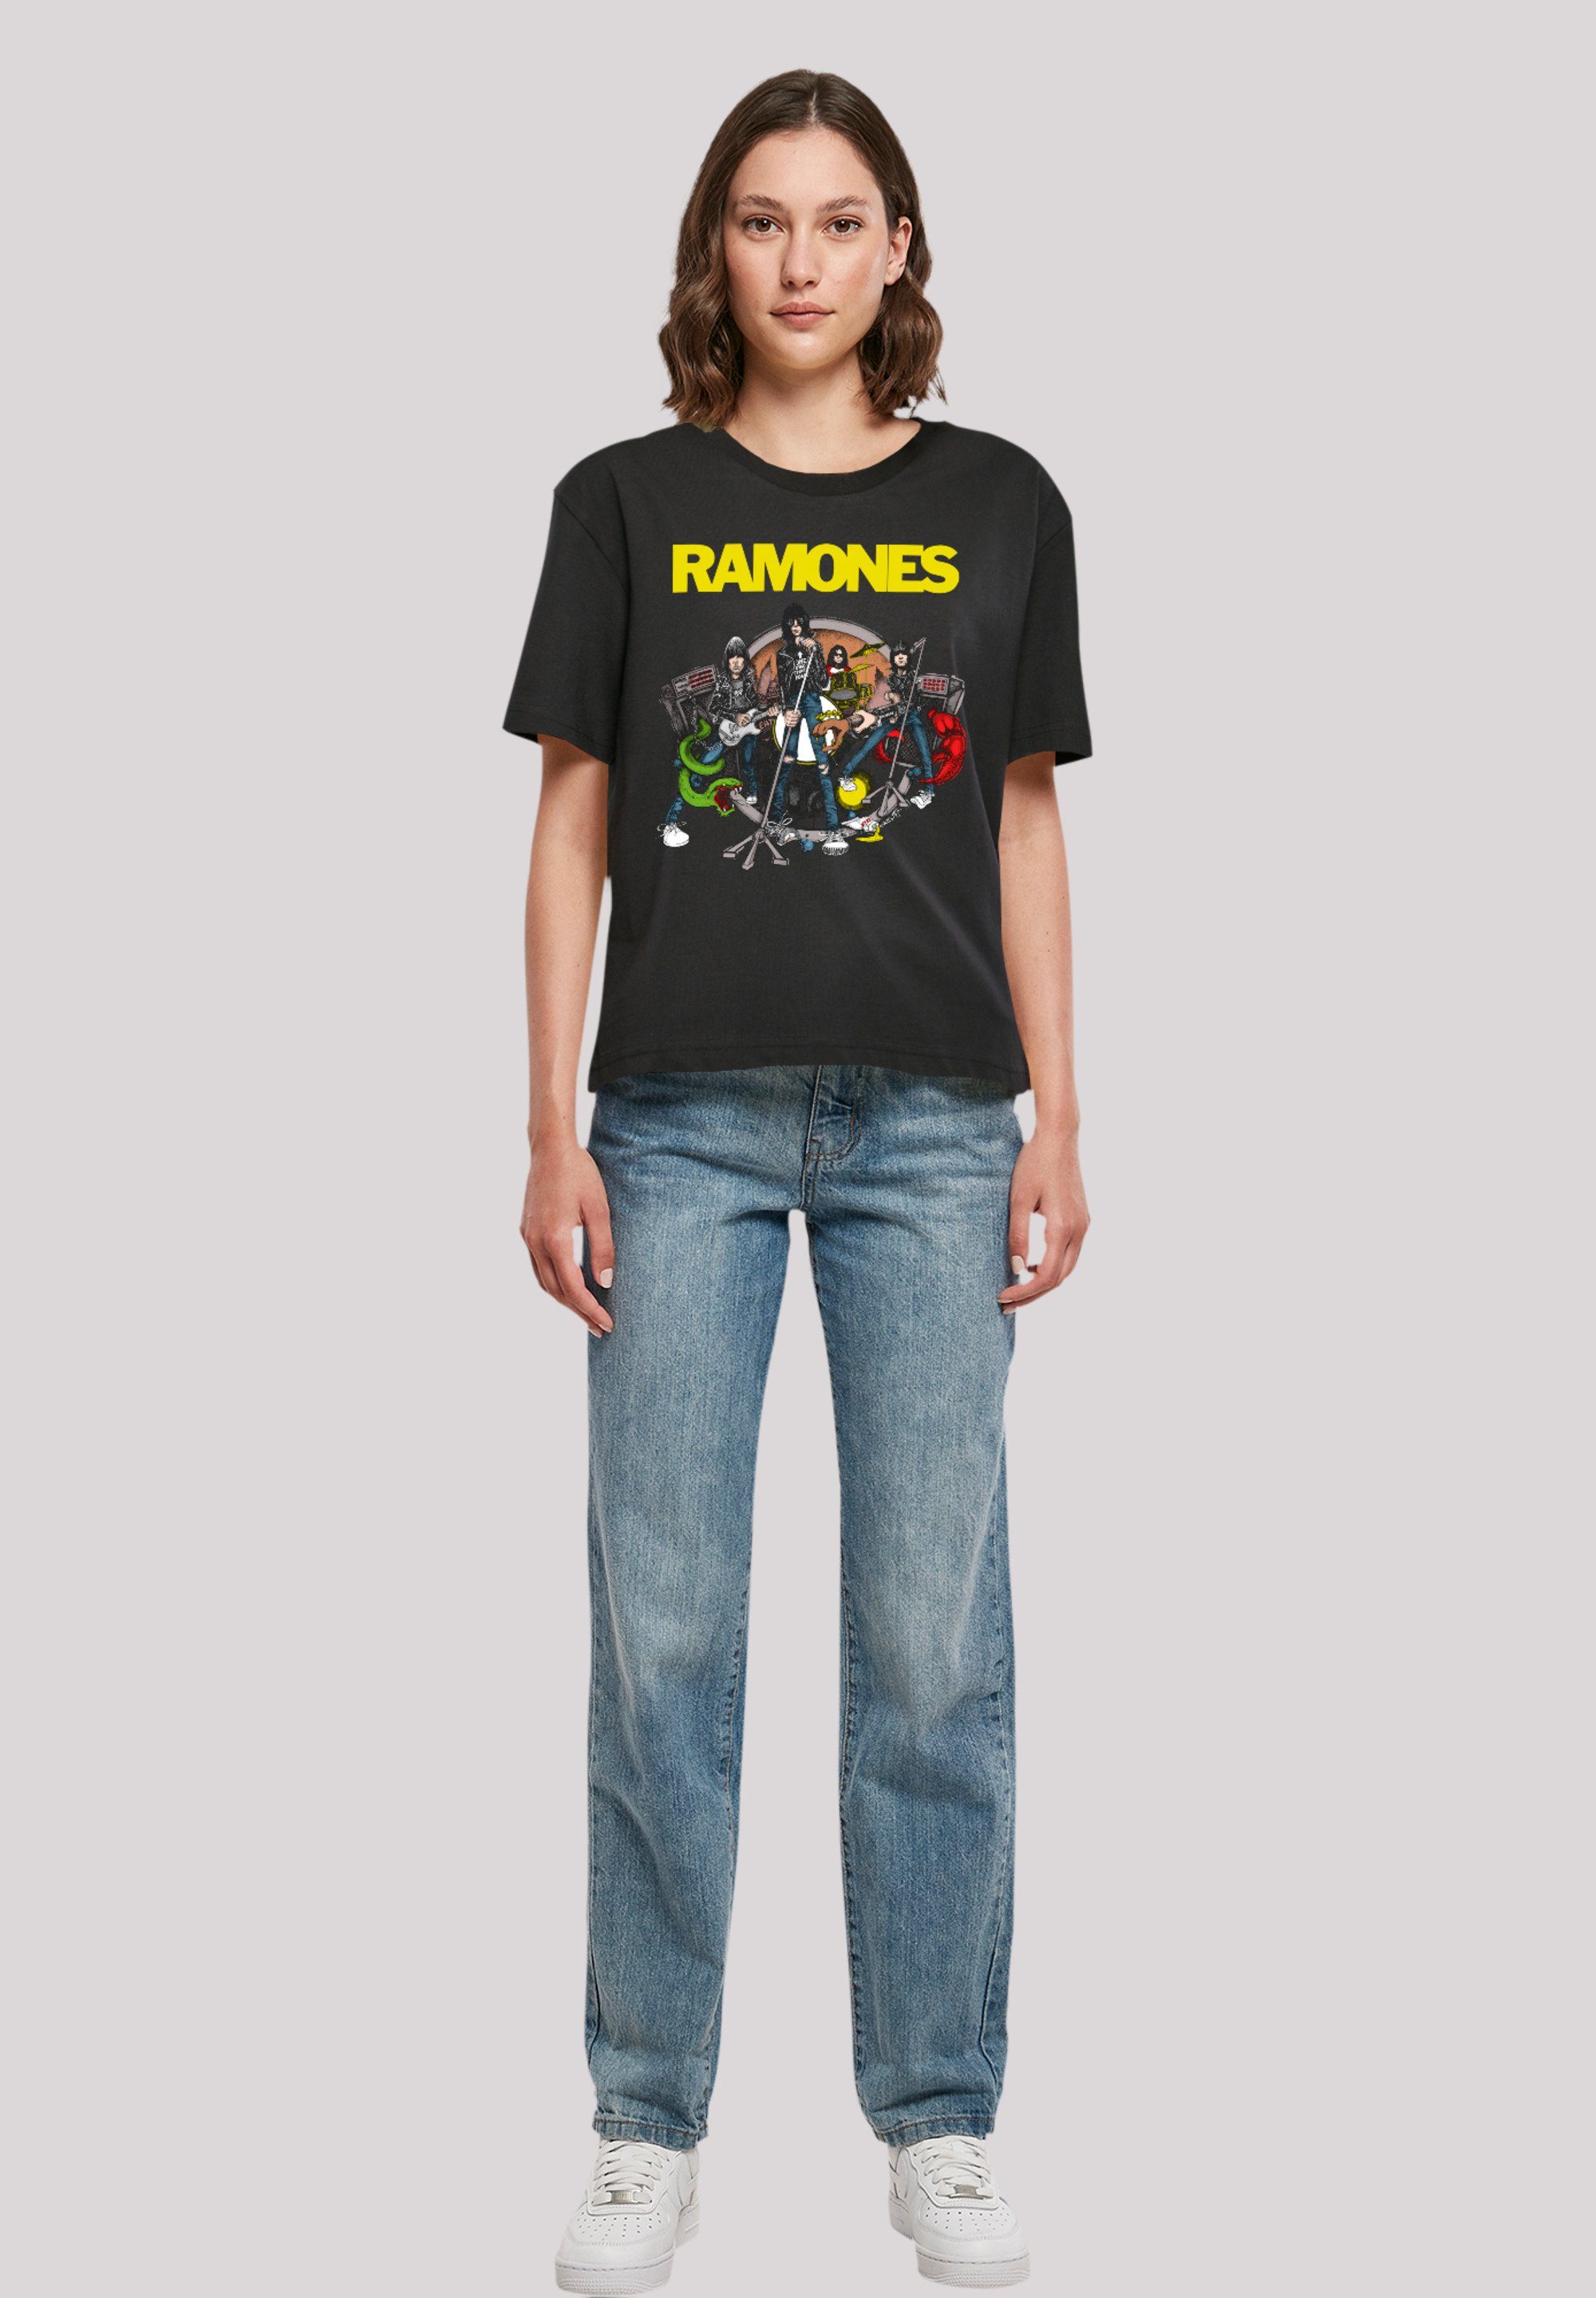 F4NT4STIC T-Shirt Band Rock-Musik Qualität, Ramones Ruin Road To Musik Rock Premium Band